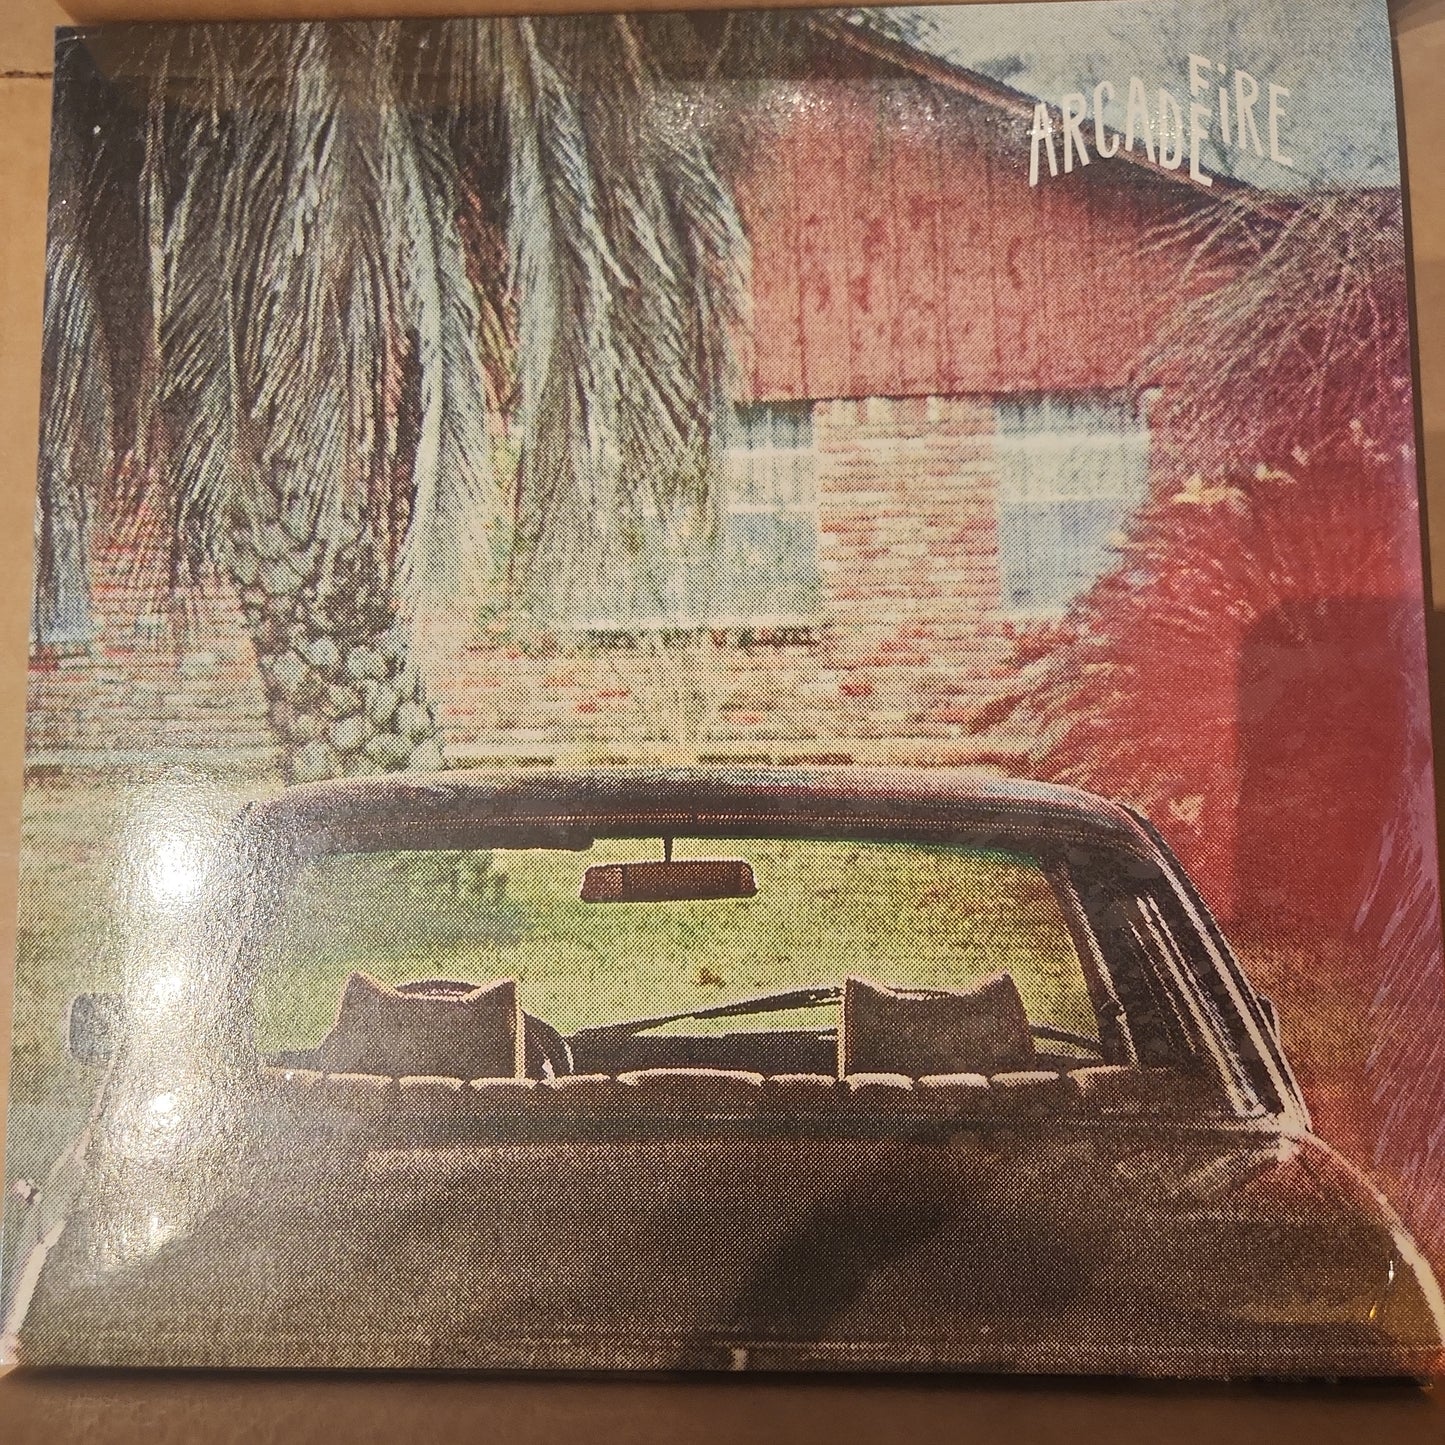 Arcade Fire - The Suburbs - Vinyl LP